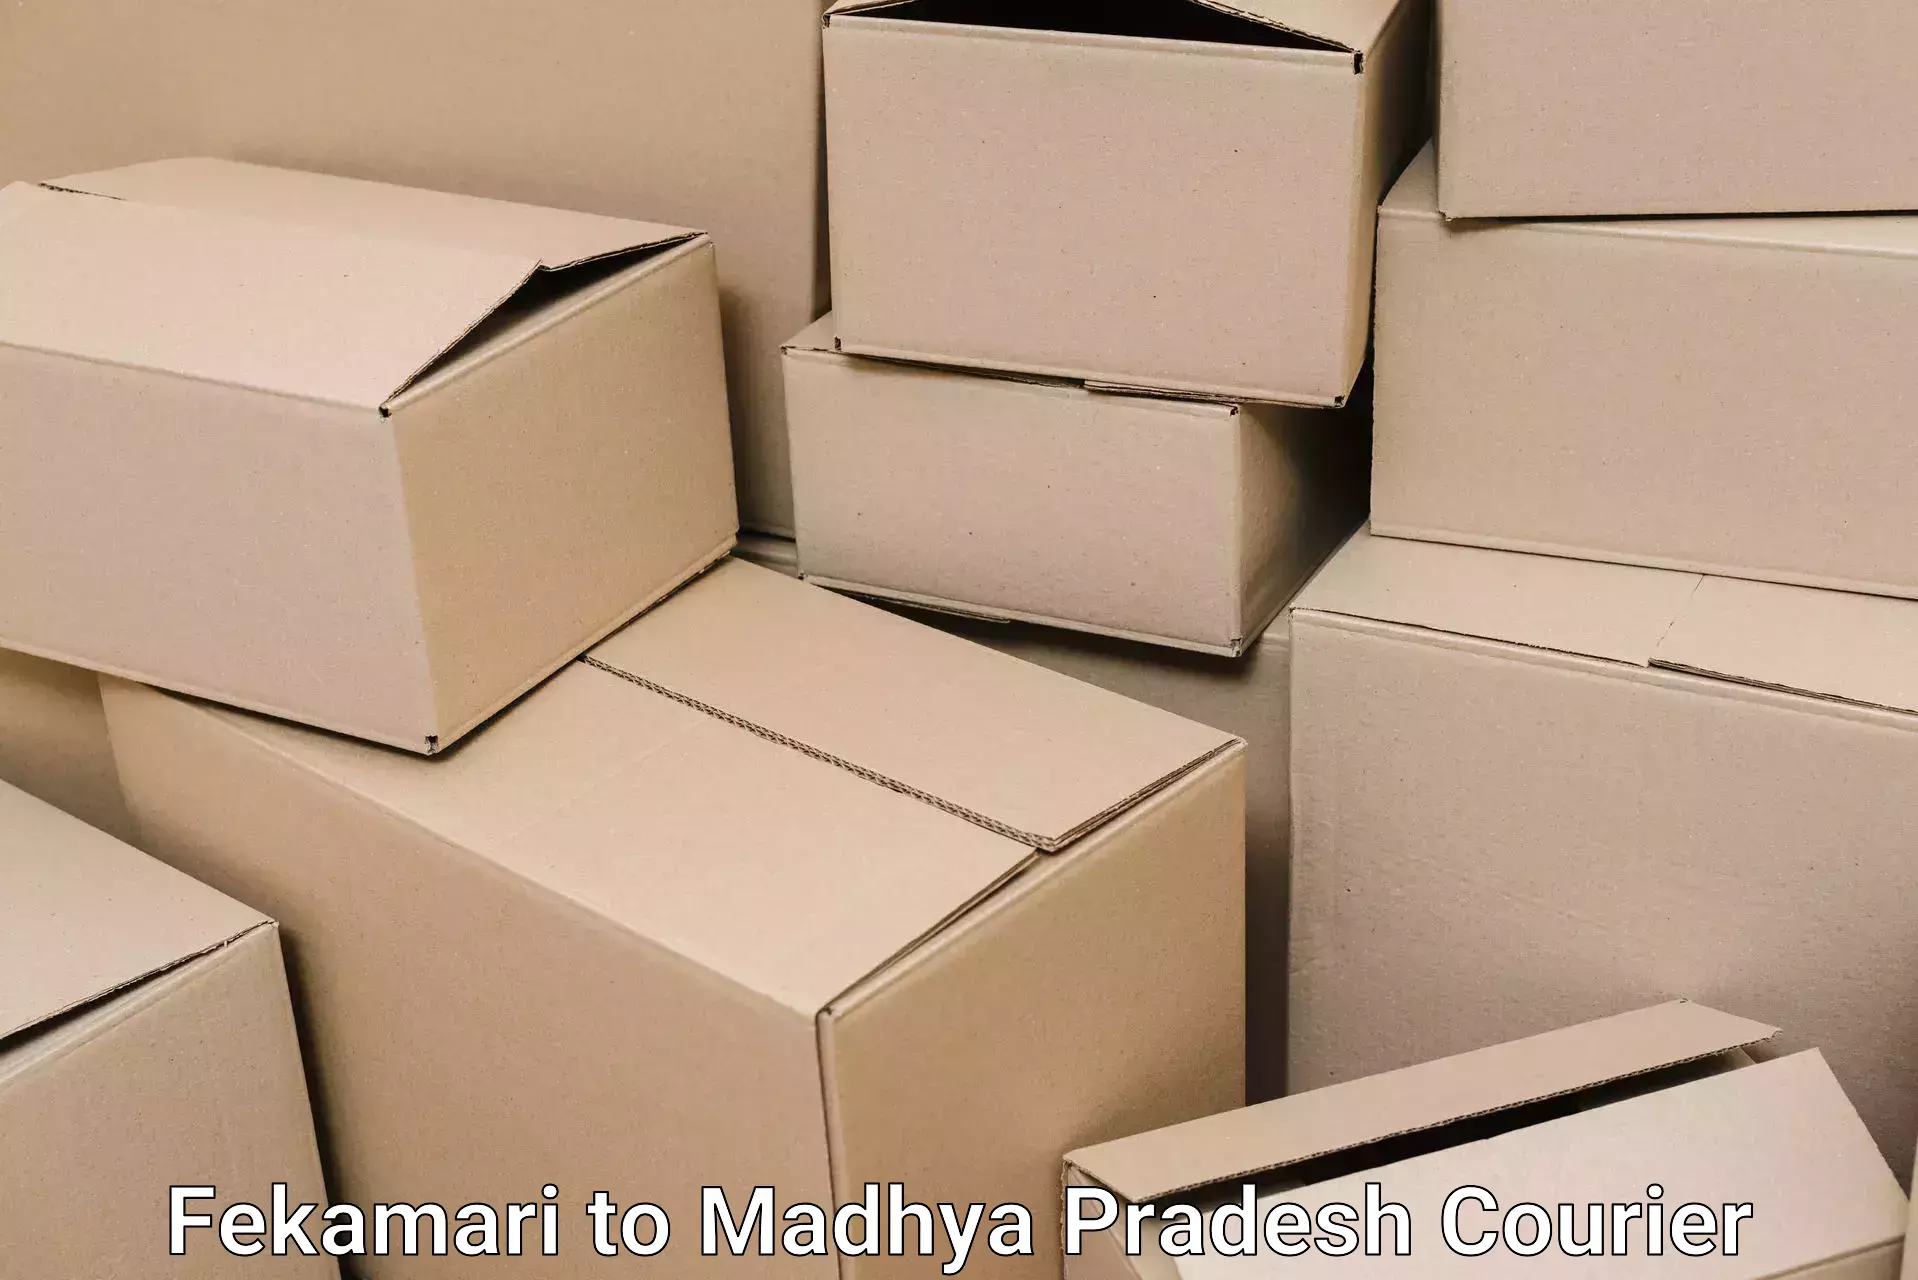 Seamless moving process Fekamari to Vidisha